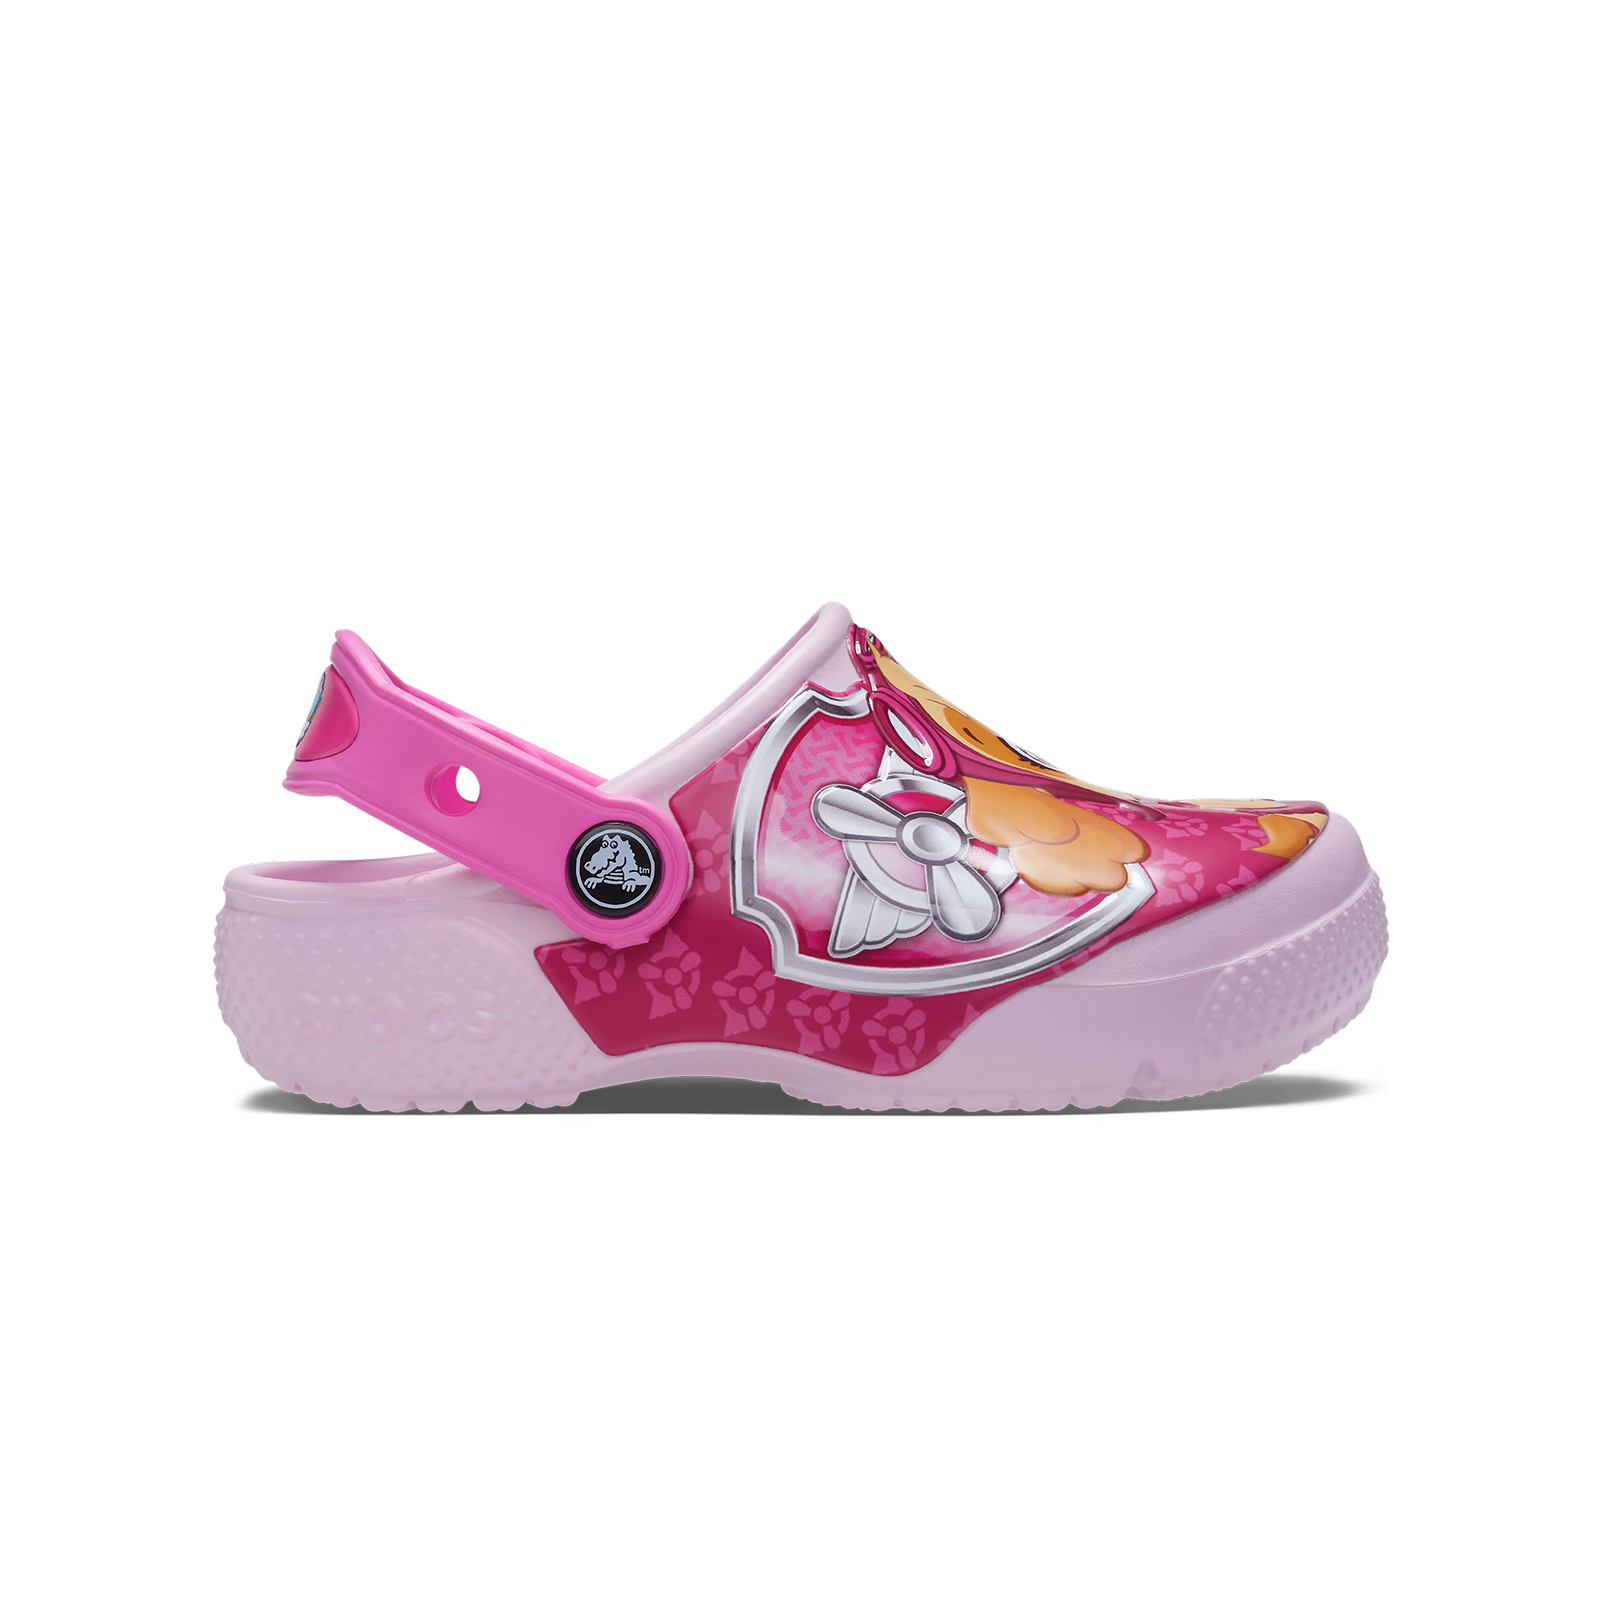 Crocs - FL PAW PATROL PATCH CG T - BALLERINA PINK Παιδικά > Παπούτσια > Clogs > Glogs